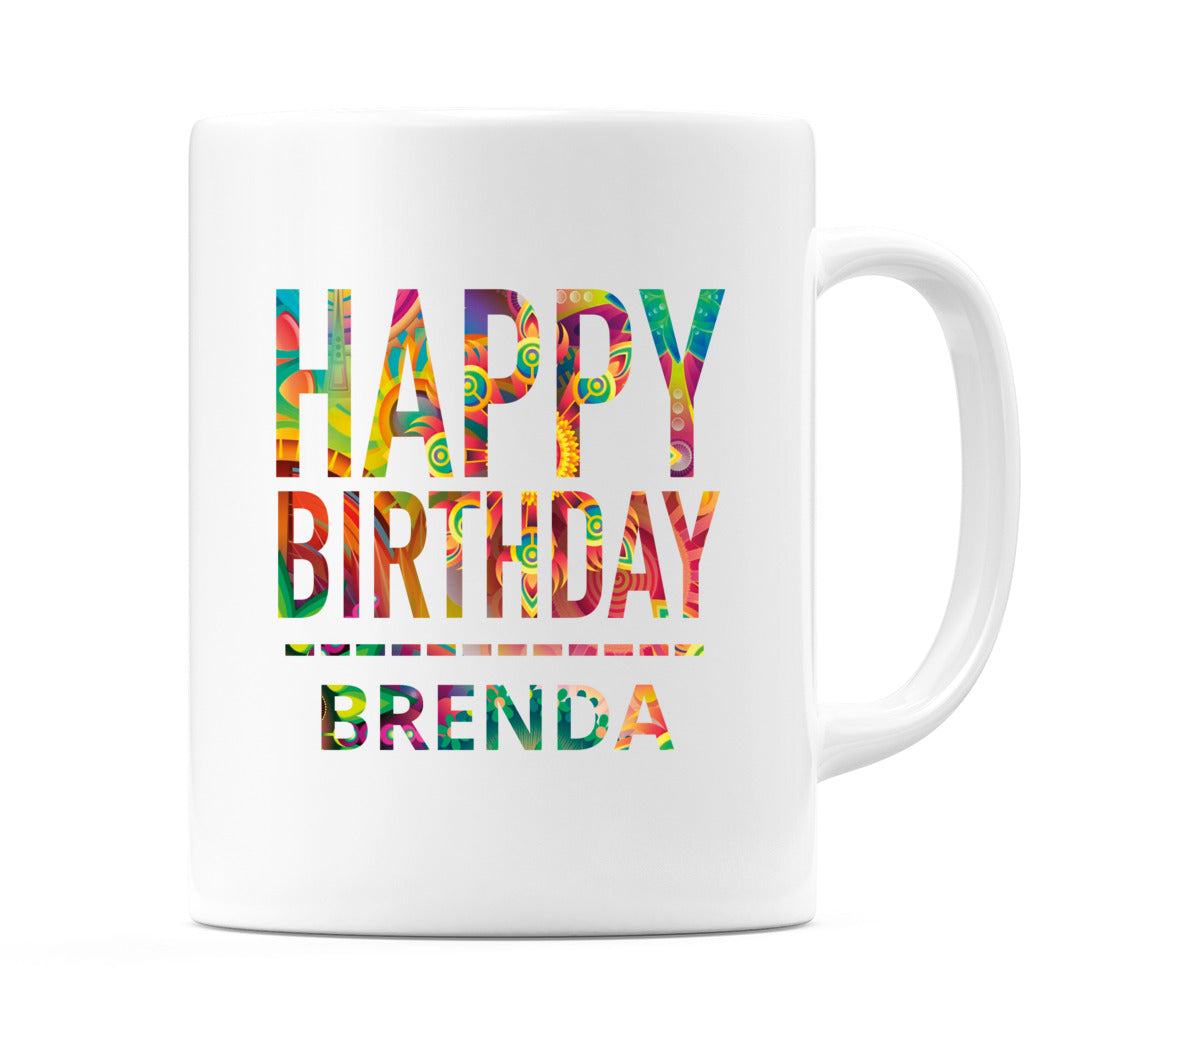 Happy Birthday Brenda (Tie Dye Effect) Mug Cup by WeDoMugs